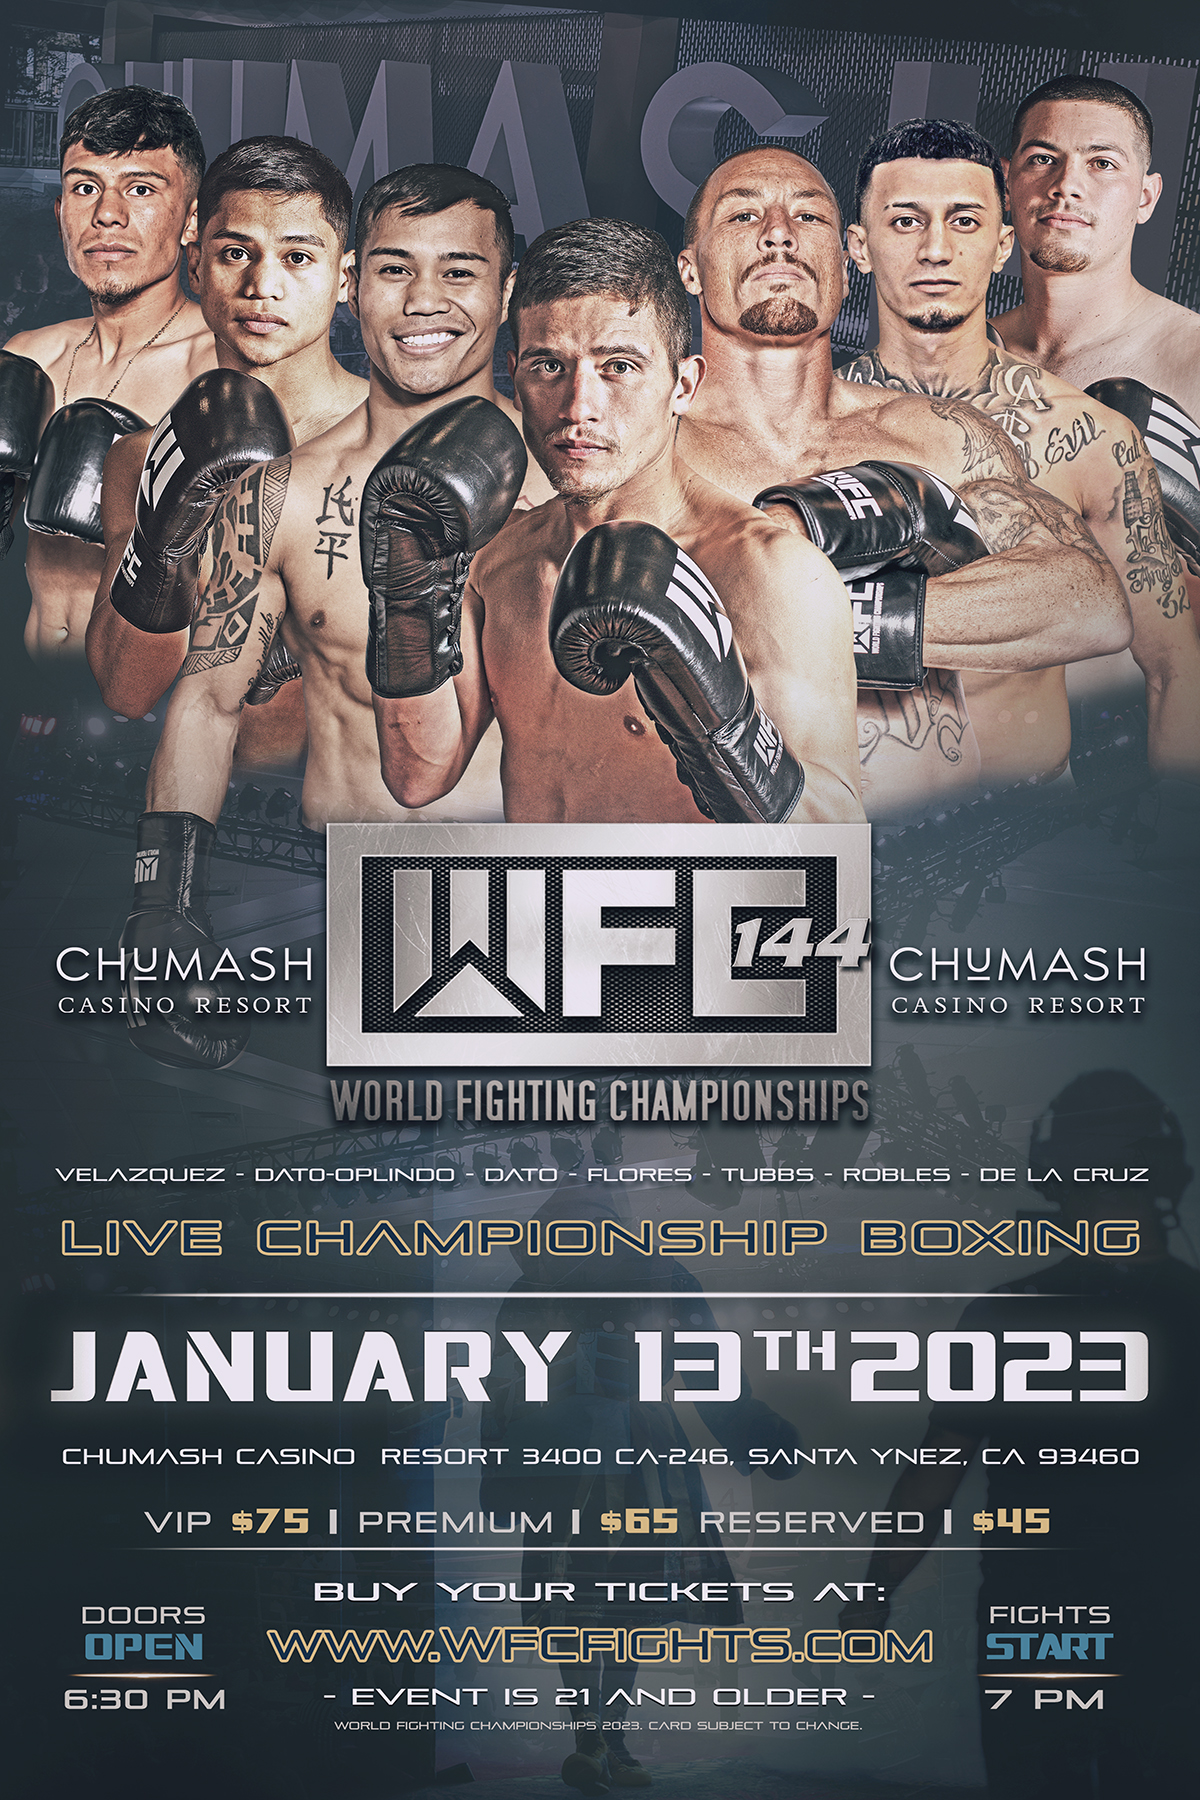 WFC 144 LIVE BOXING January 13th, 2023 at Chumash Casino